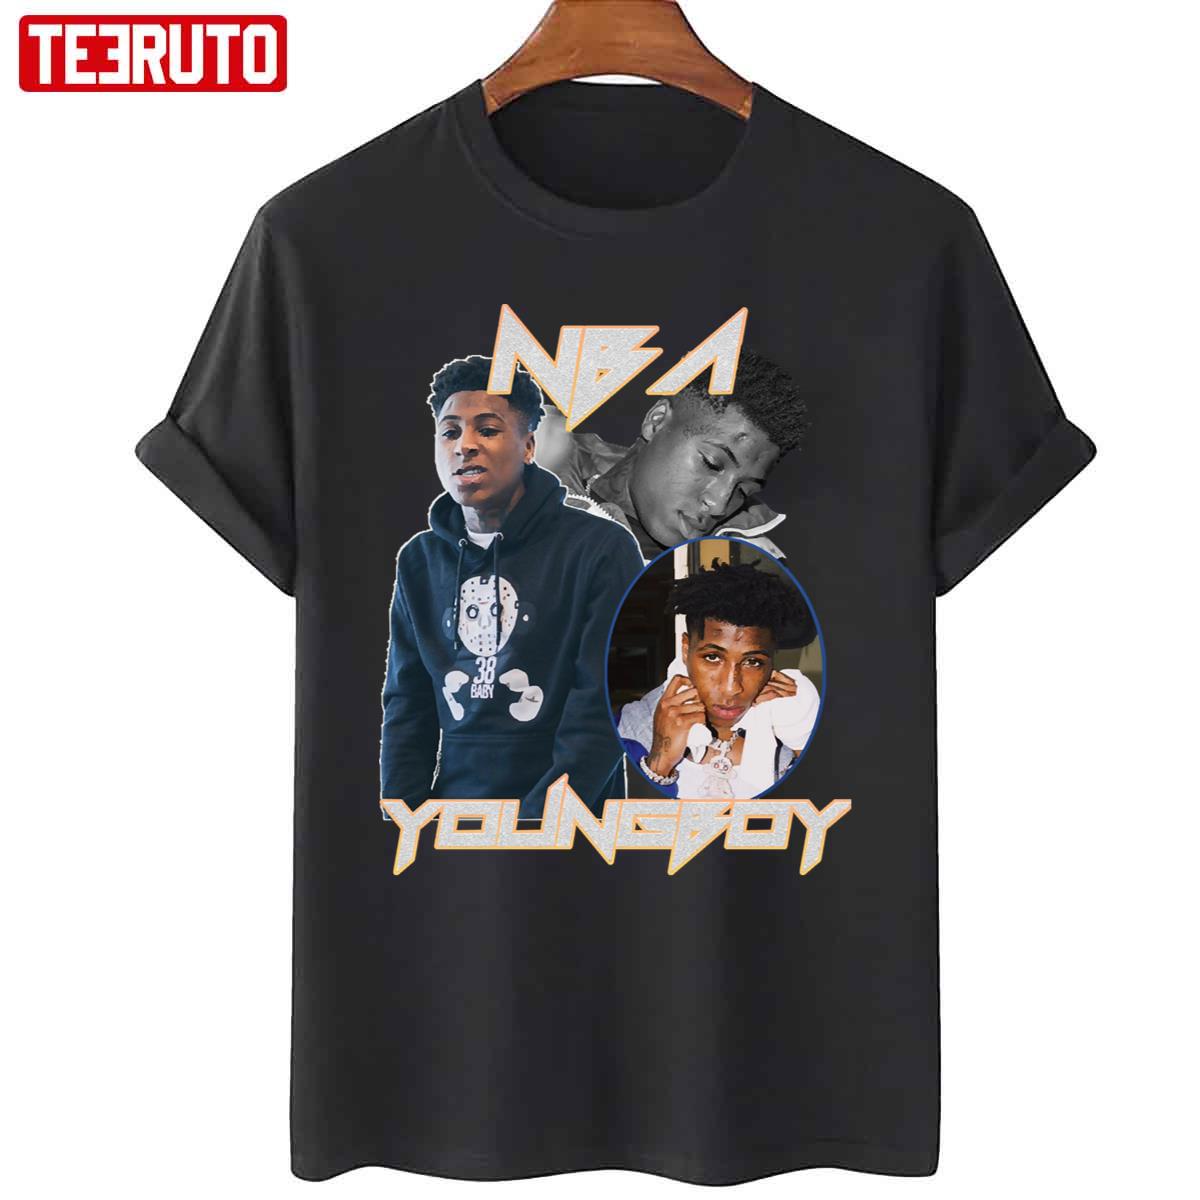 Nba Youngboy Vinatge Bootleg Rapper Unisex T-Shirt